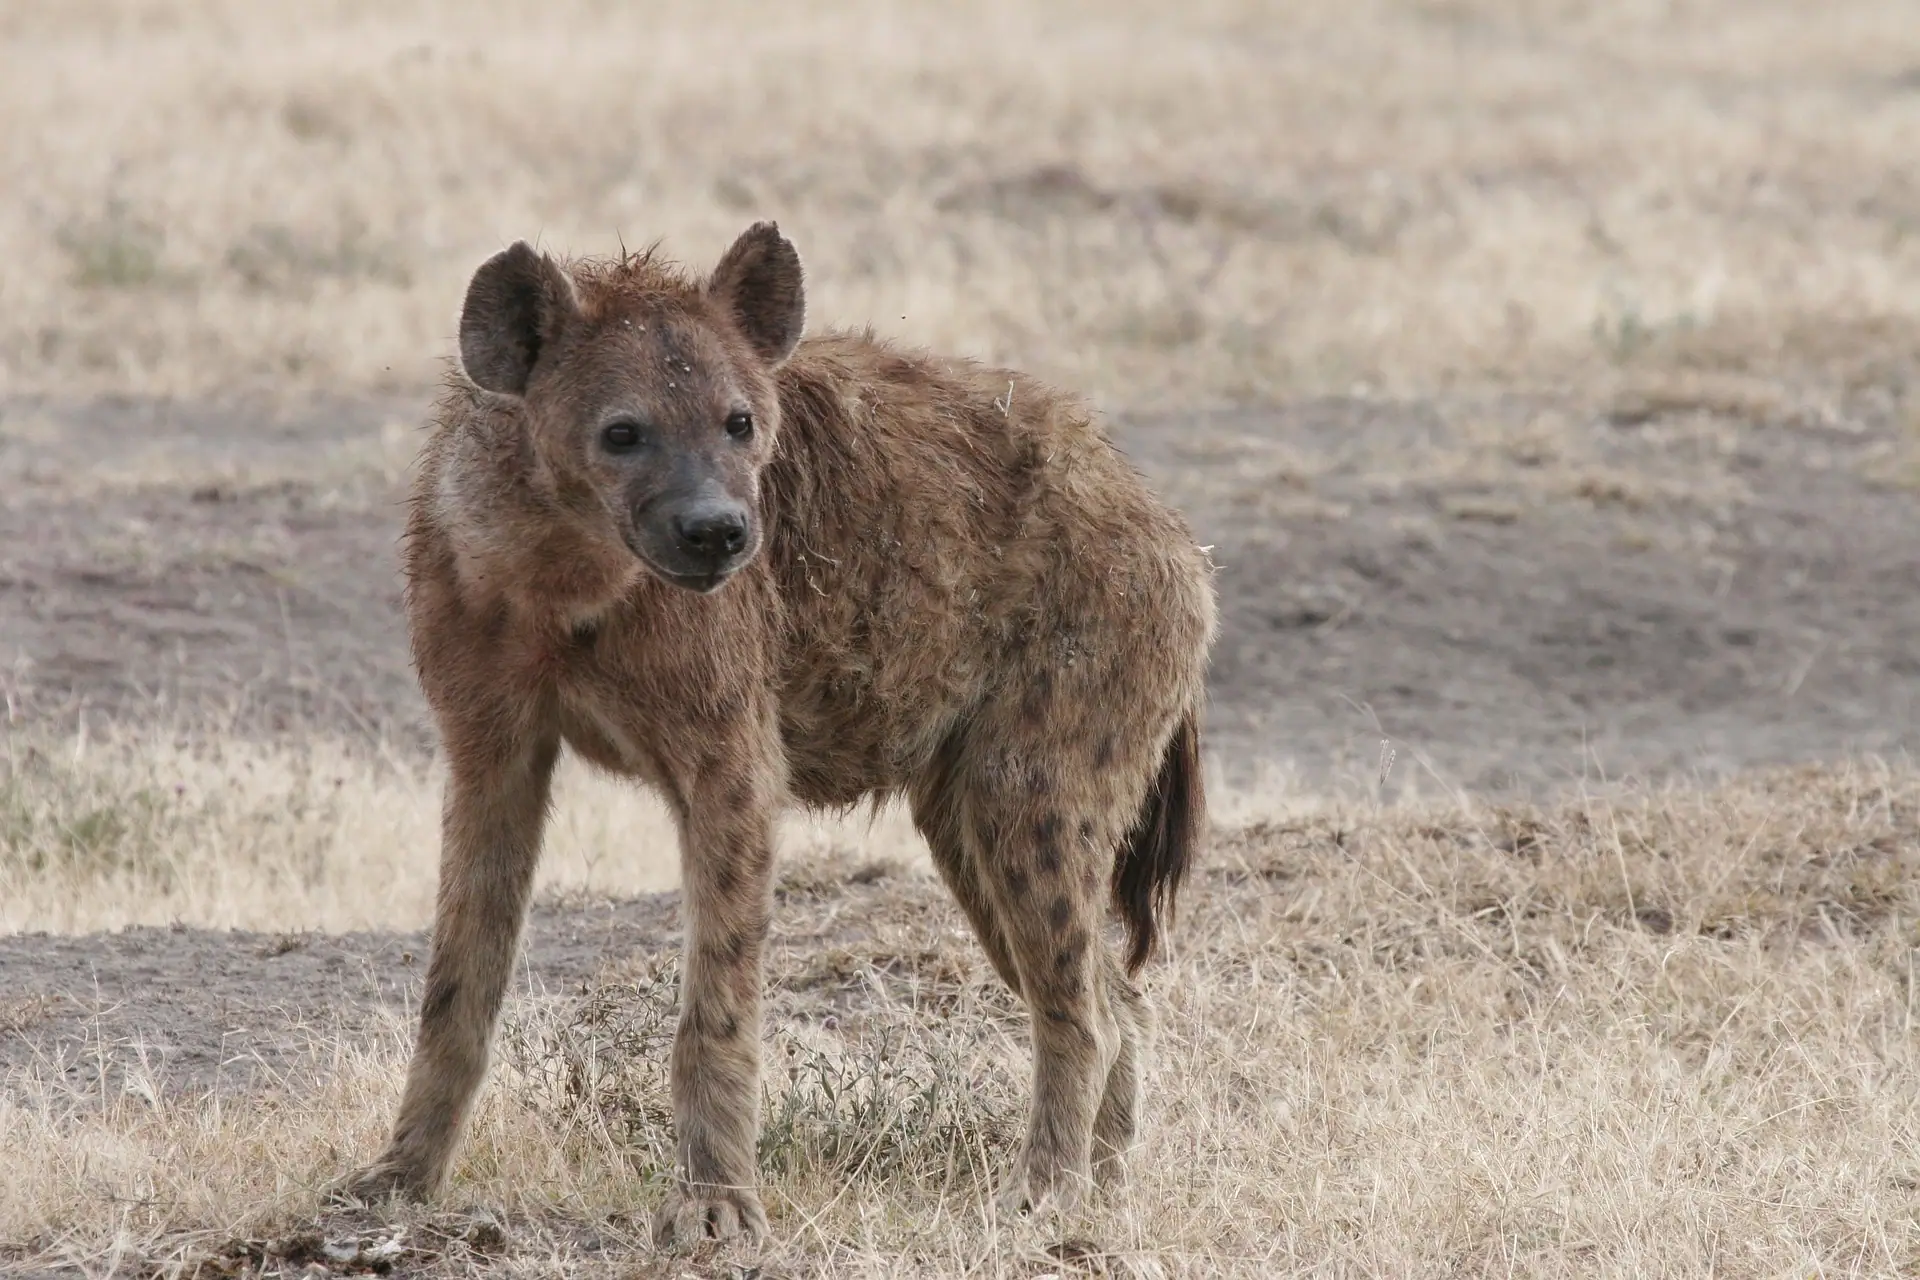 Kenya animals- the spotted hyena